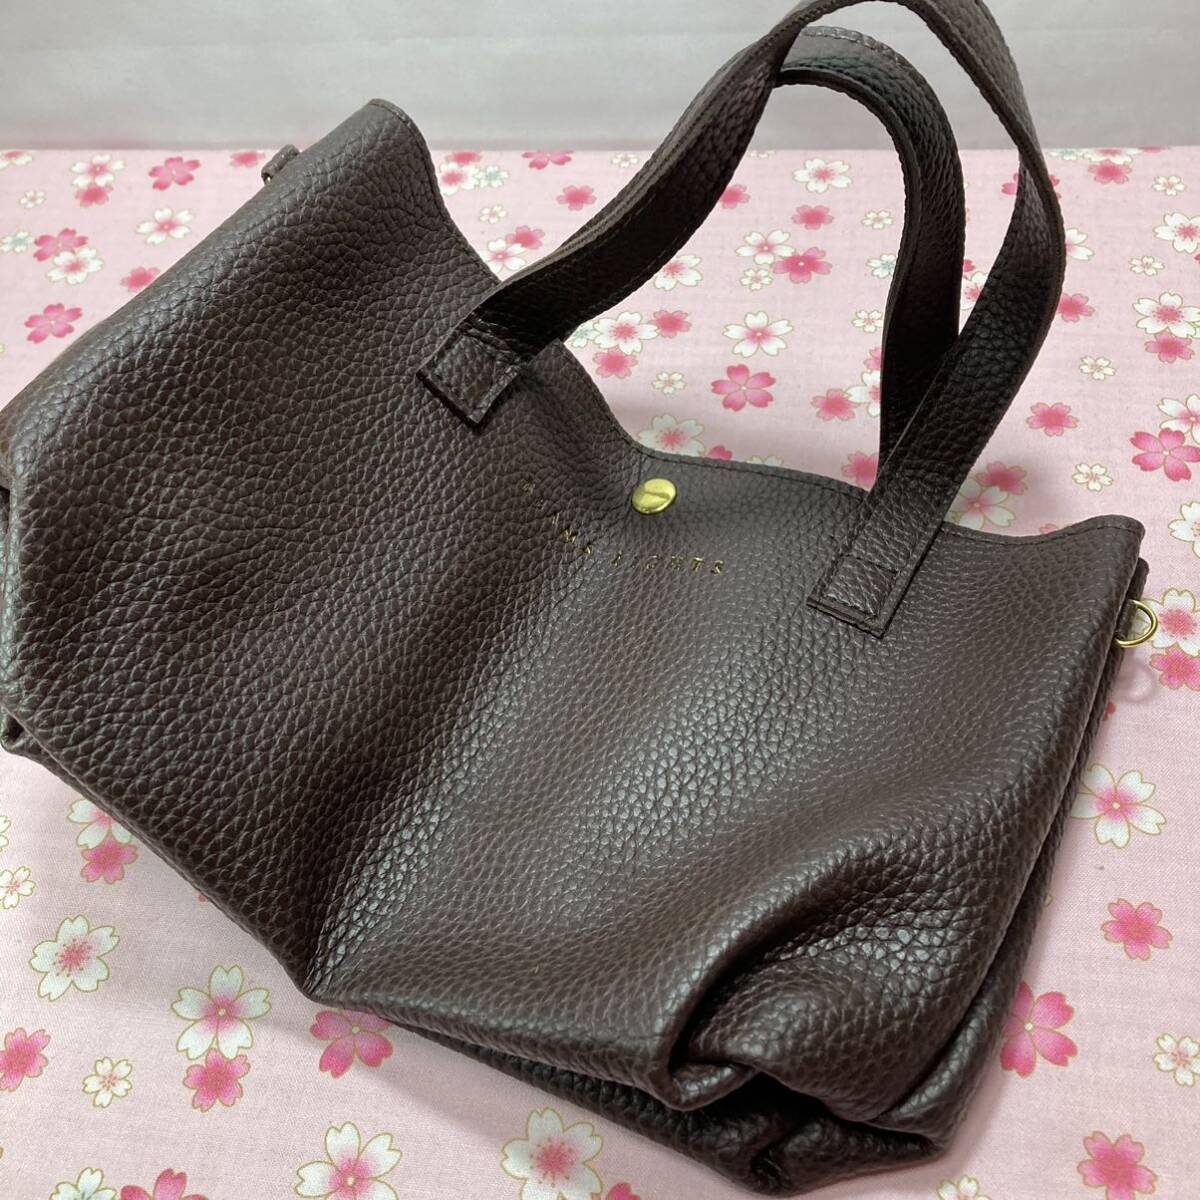 BEAMS Beams LIGHTSlaitsu×harris tweed[ both sides pretty ] shoulder tote bag ( Brown ) handbag pochette lunch tote bag Mini bag 